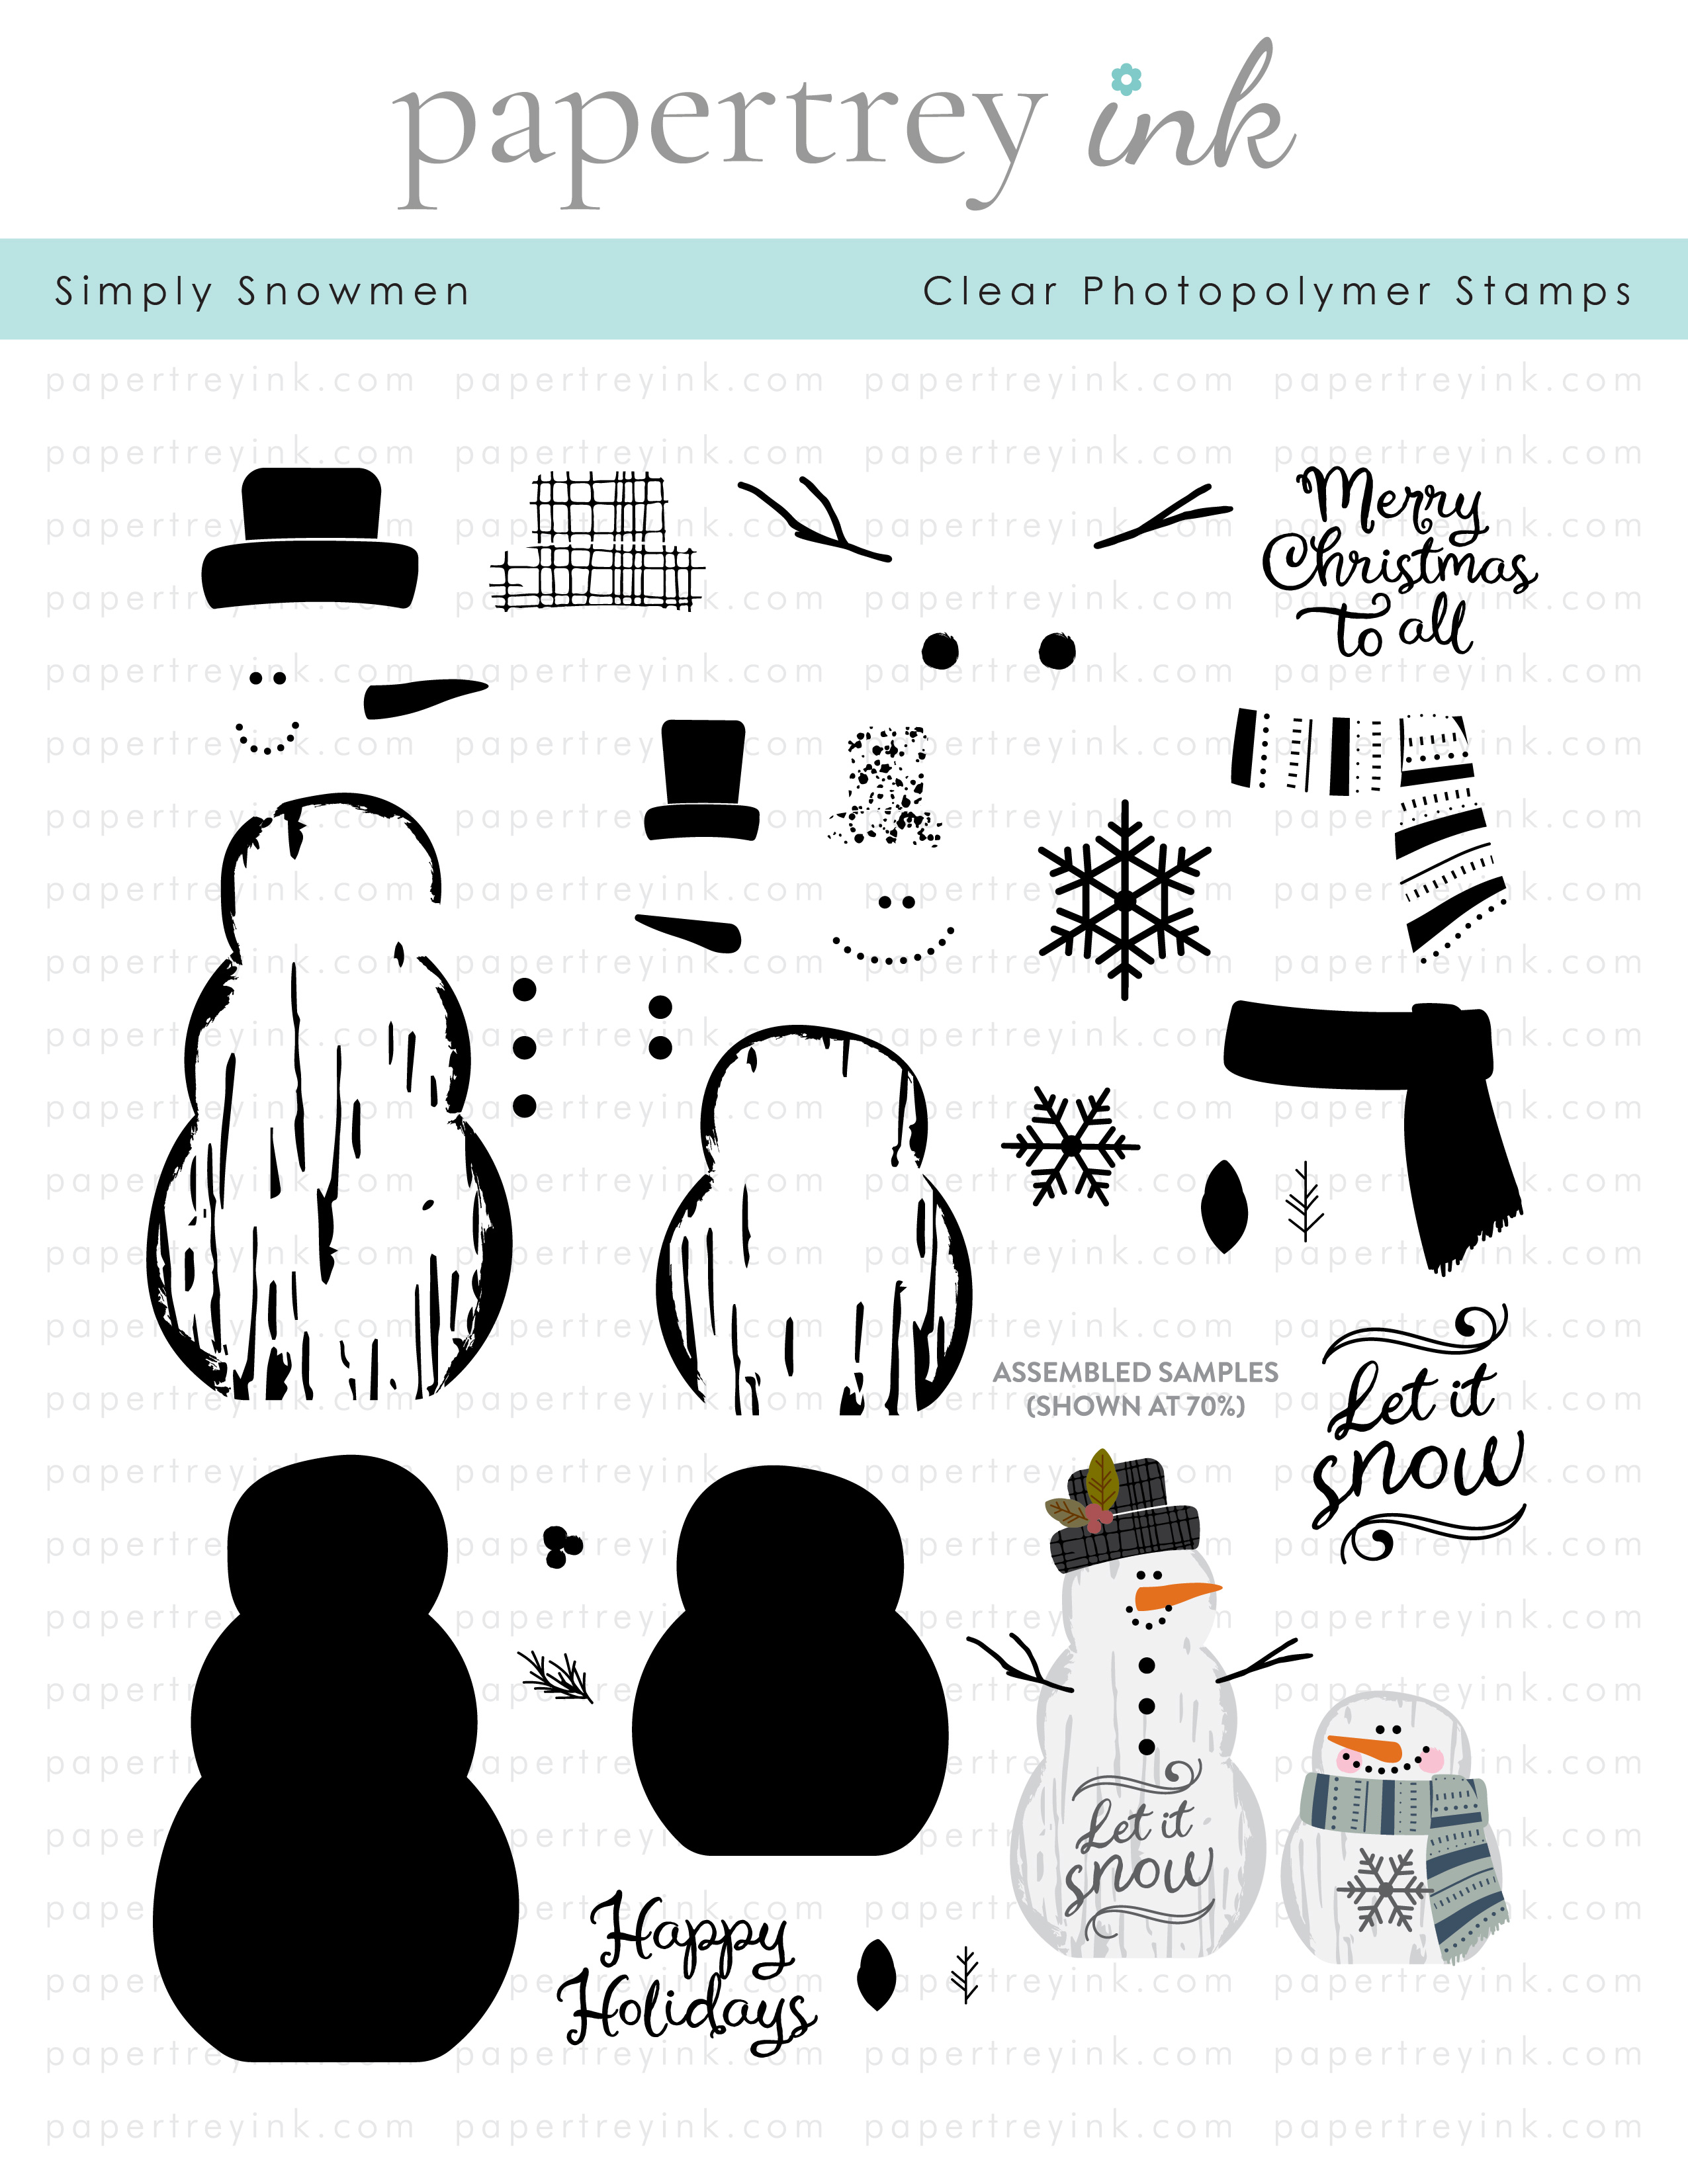 Simply Snowmen Stamp Set